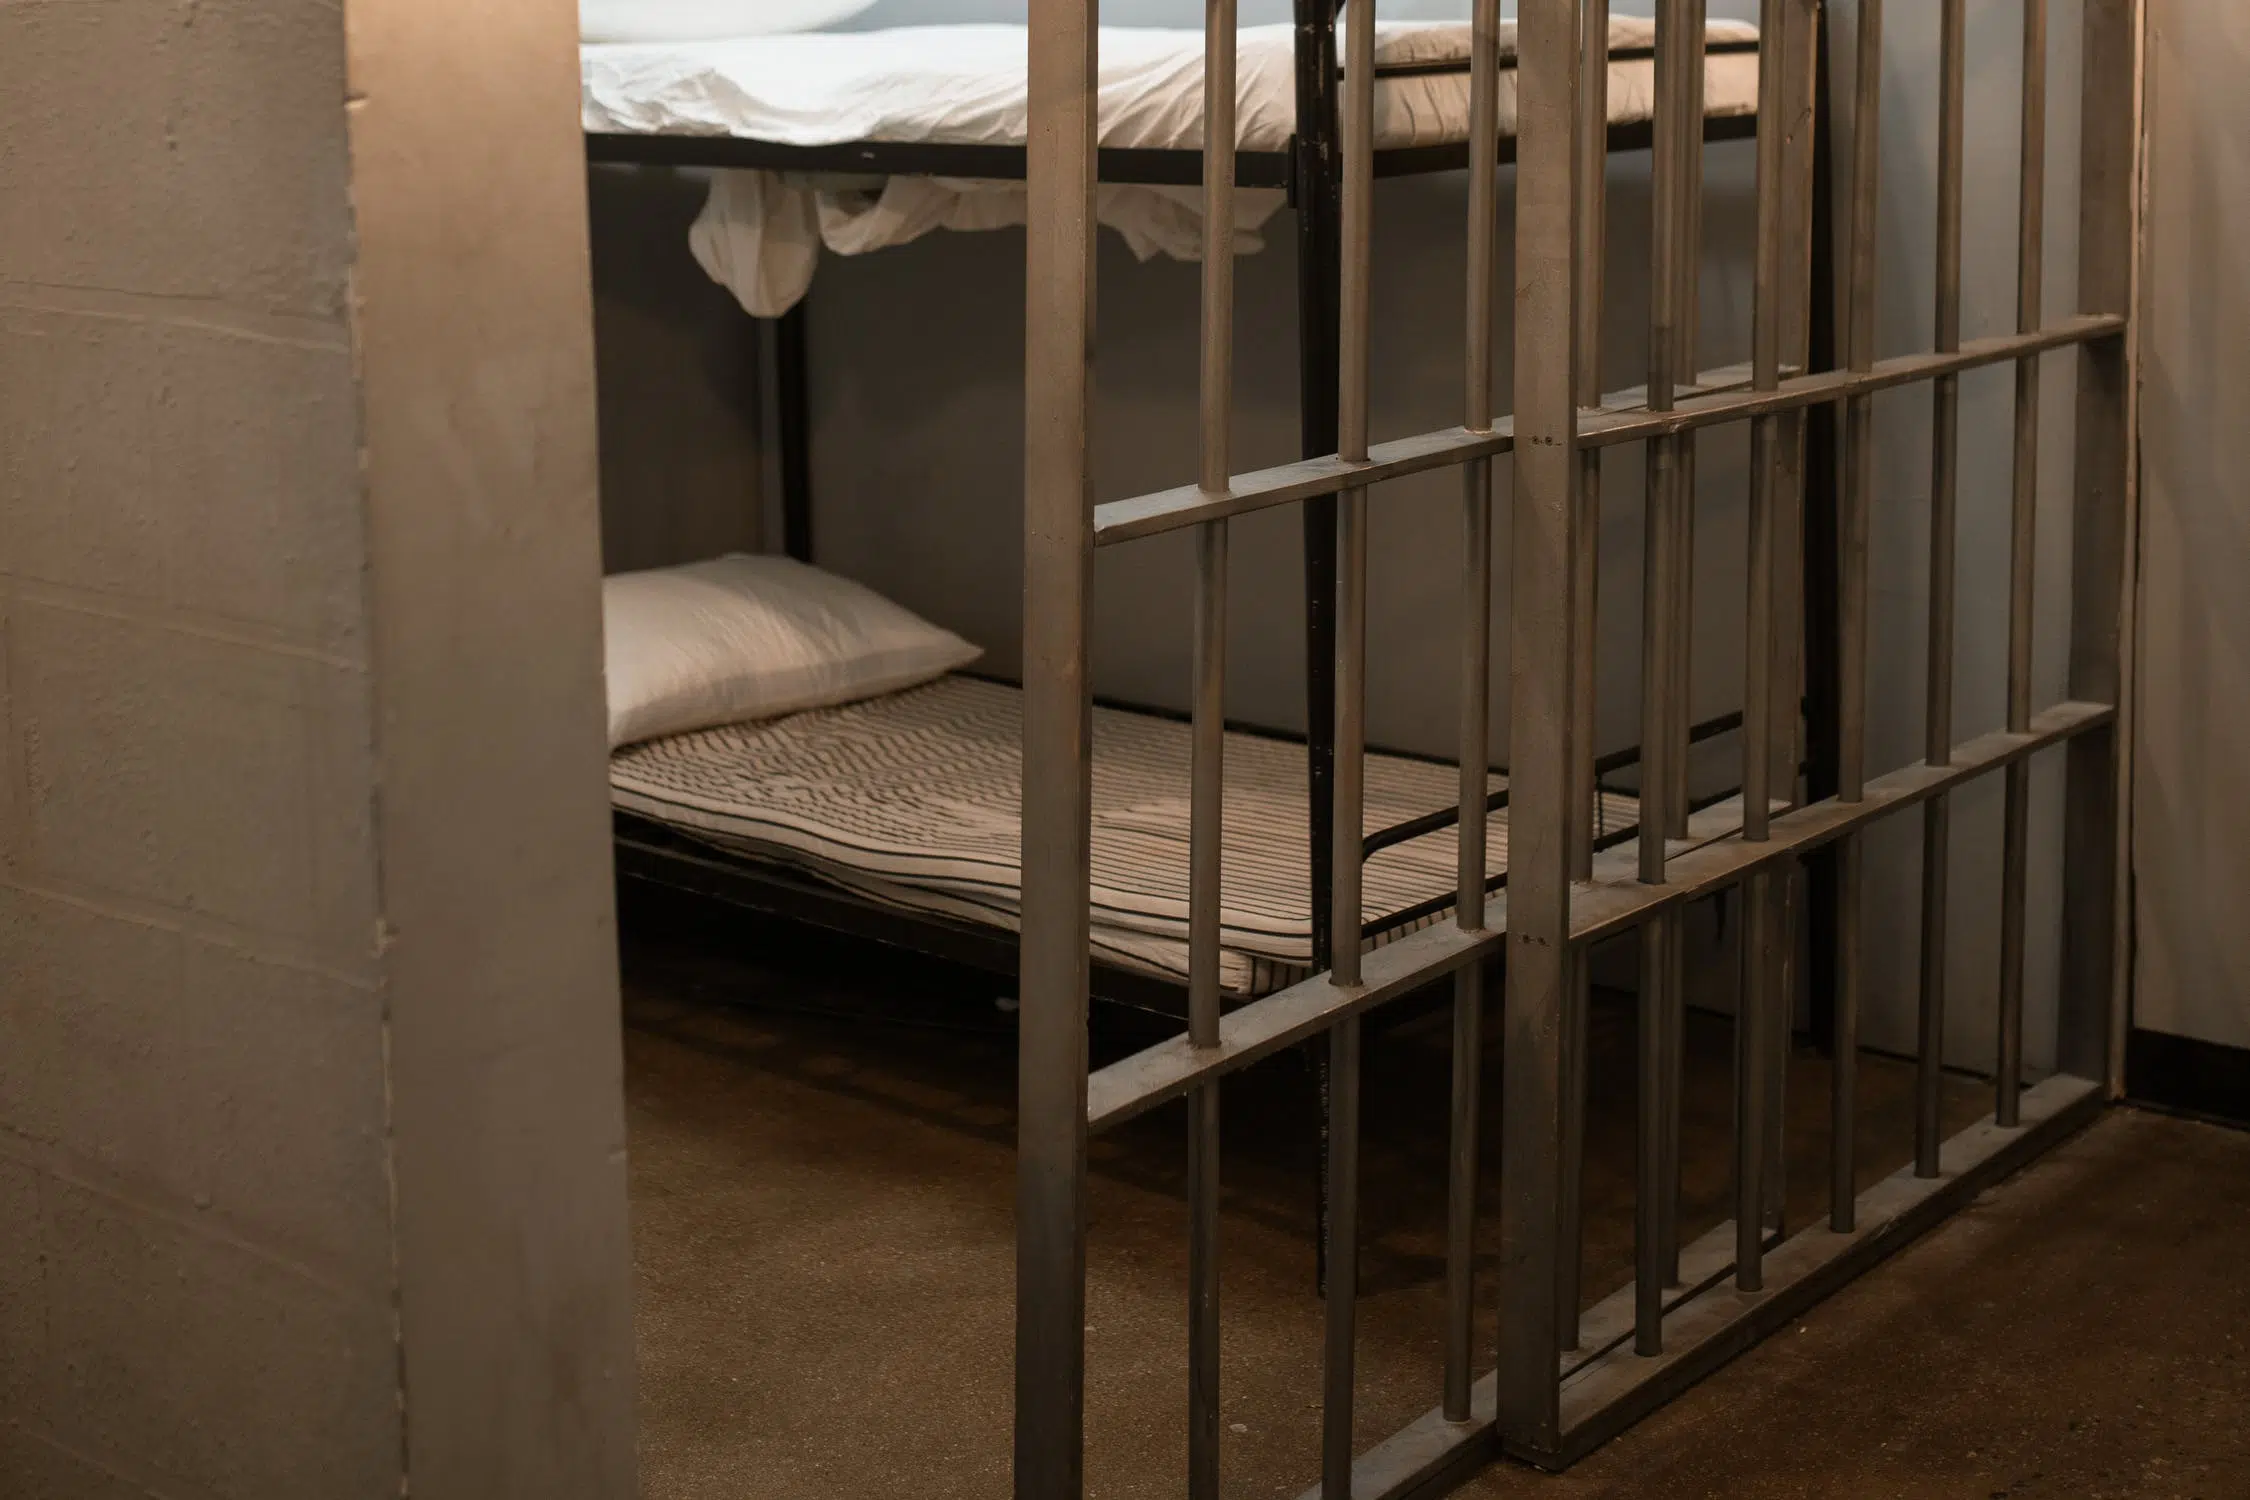 Report: Prisoners concerned over time spent in lockdown